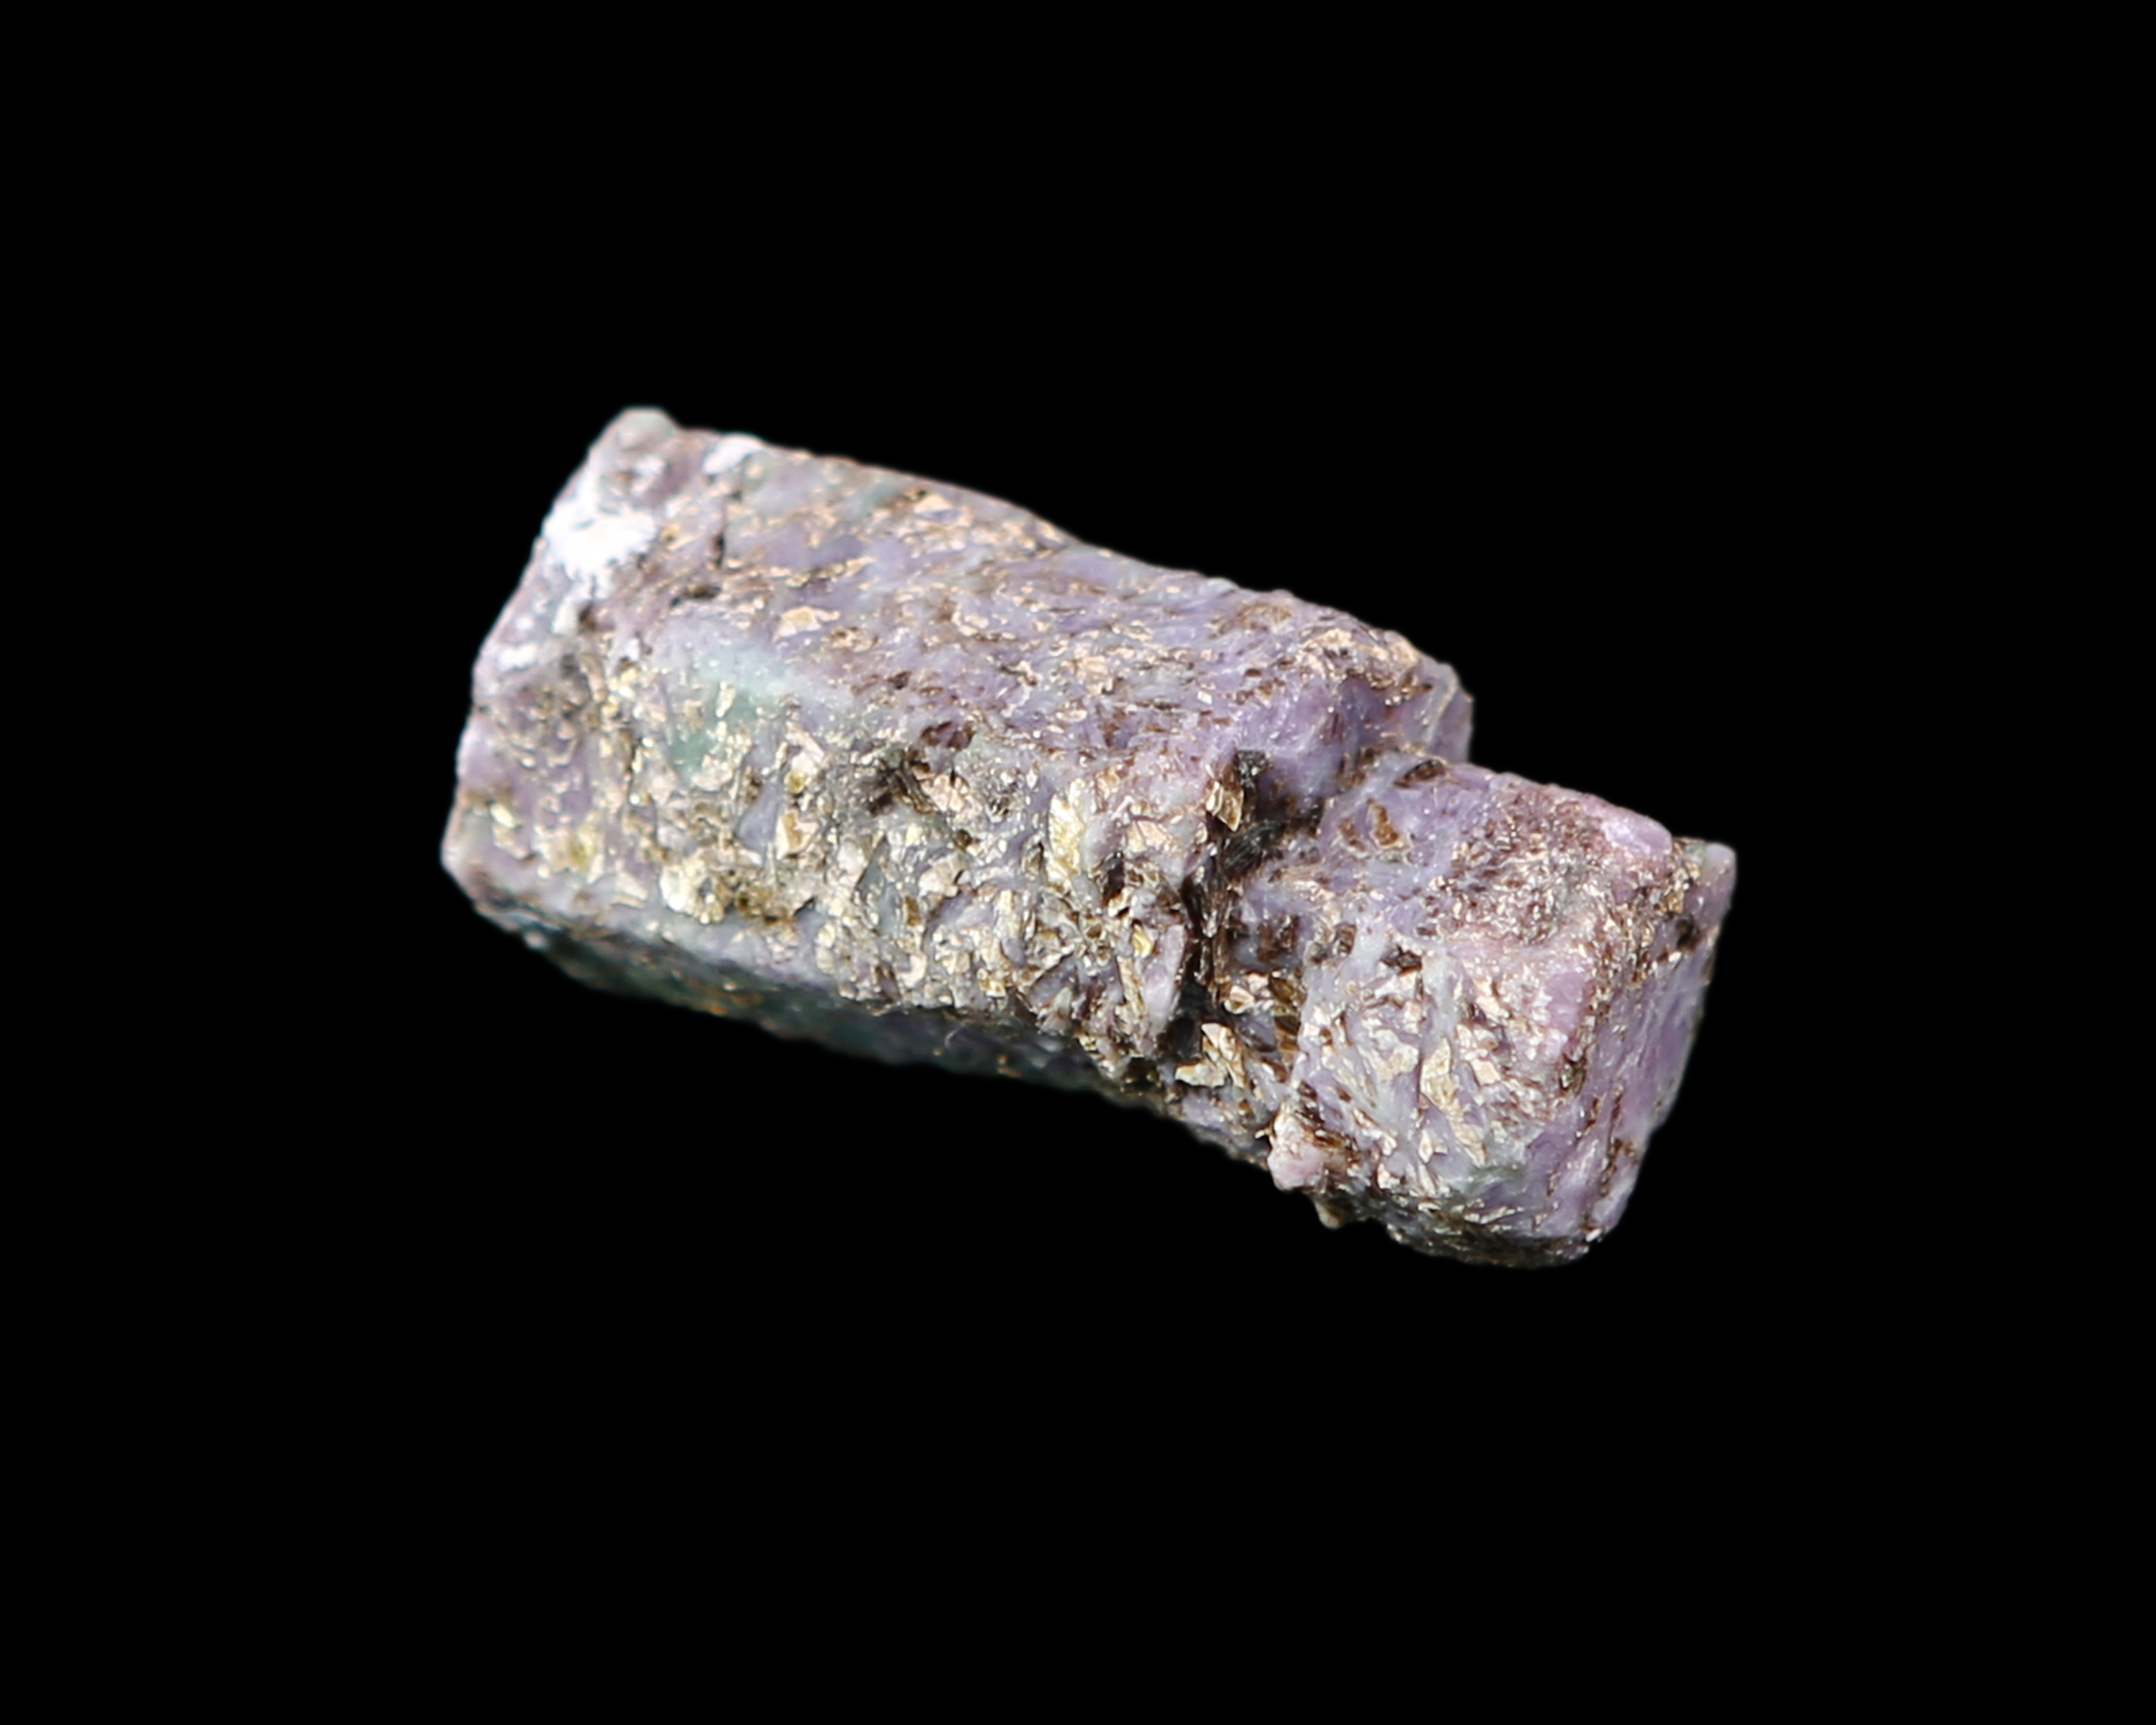 Ruby- Corundum Mineral Specimen - Celestial Earth Minerals
